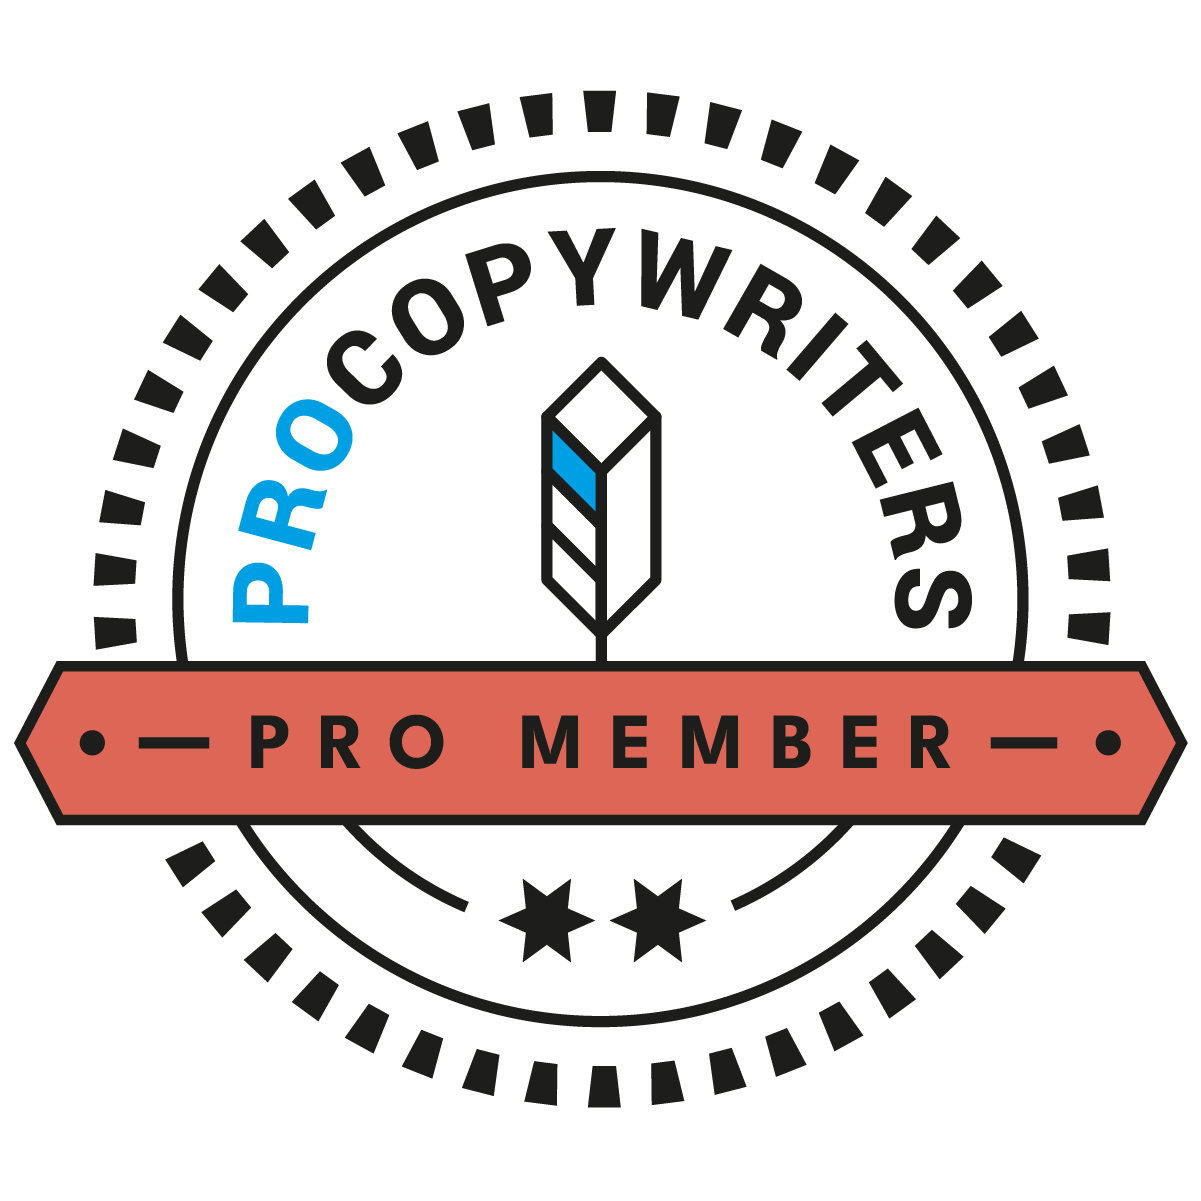 Professional Copywriters Logo